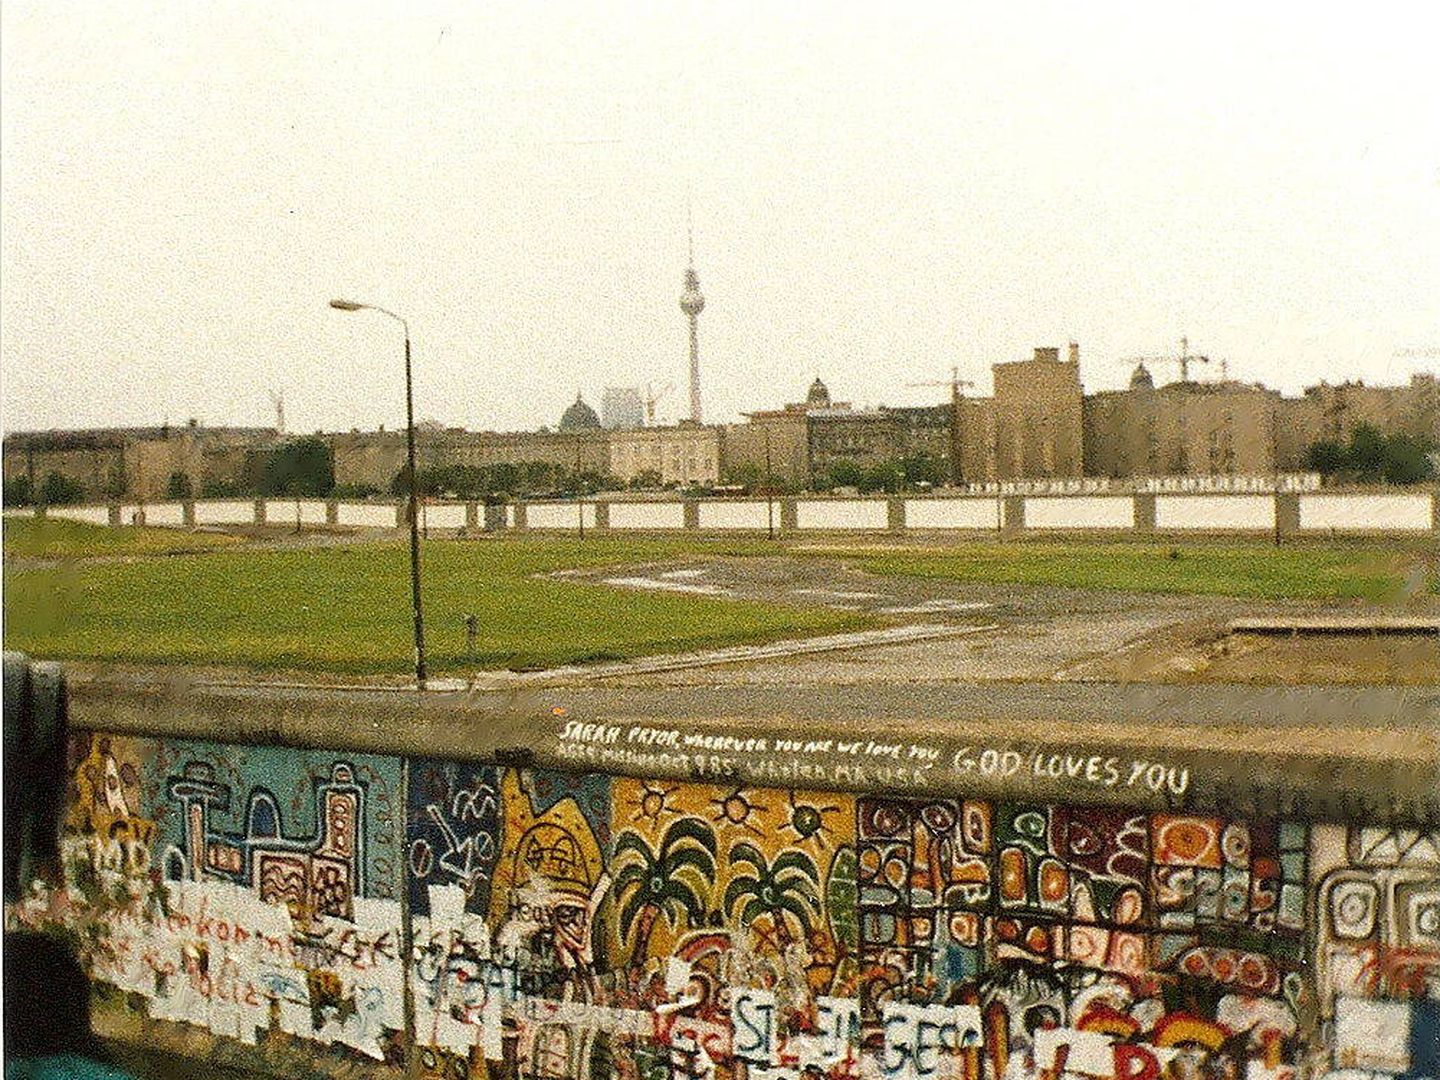 La zona de Potsdam Platz en los 80. (Wikipedia)